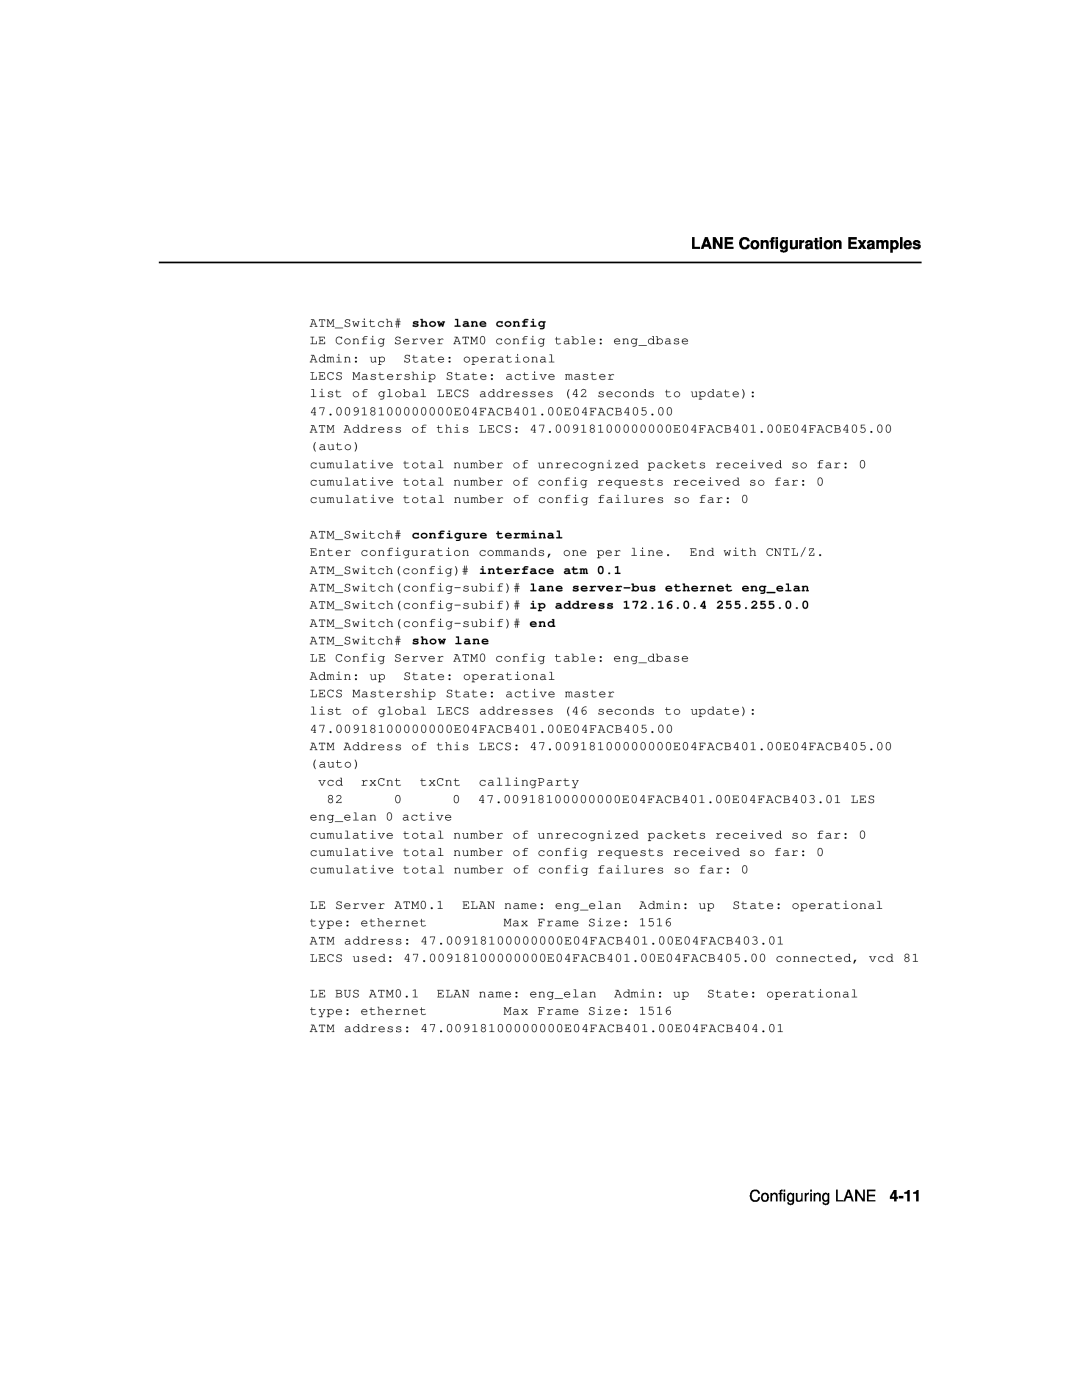 Cisco Systems 78-6897-01 manual LANE Configuration Examples, Configuring LANE, ATMSwitch# show lane config 